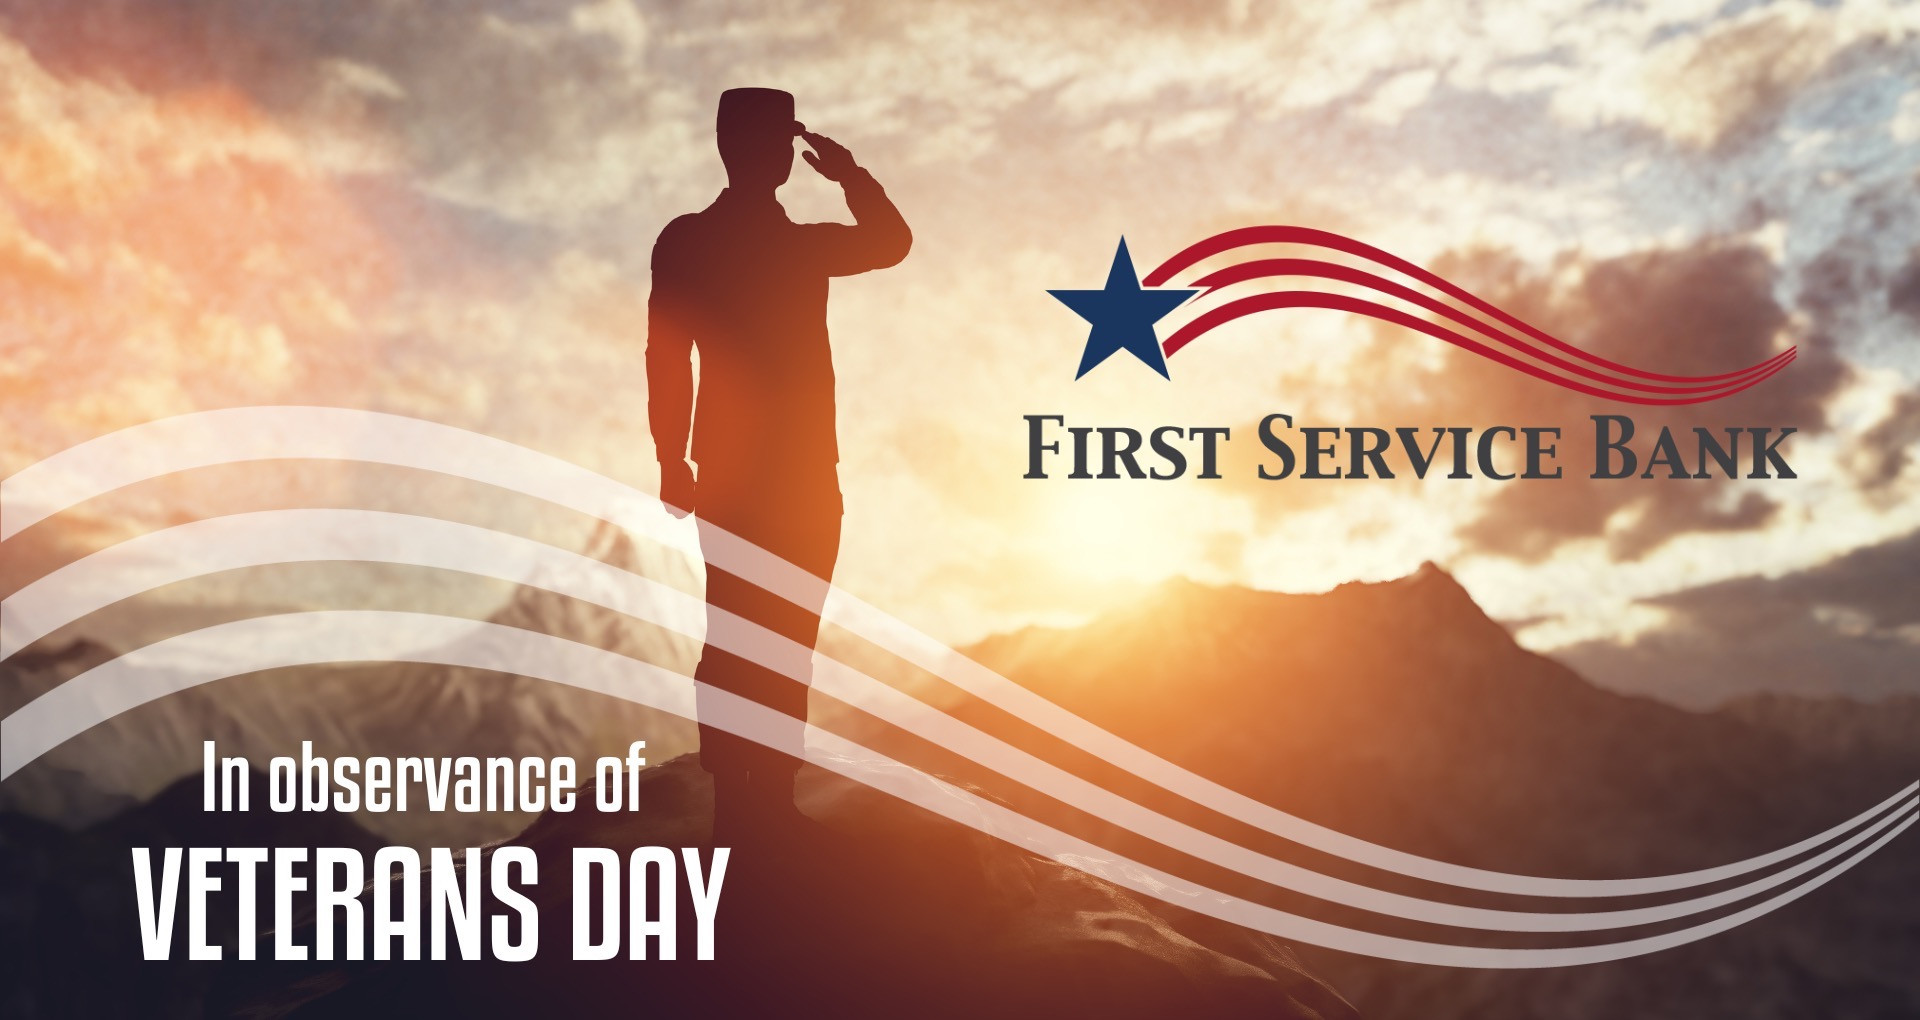 In observance of Veterans Day